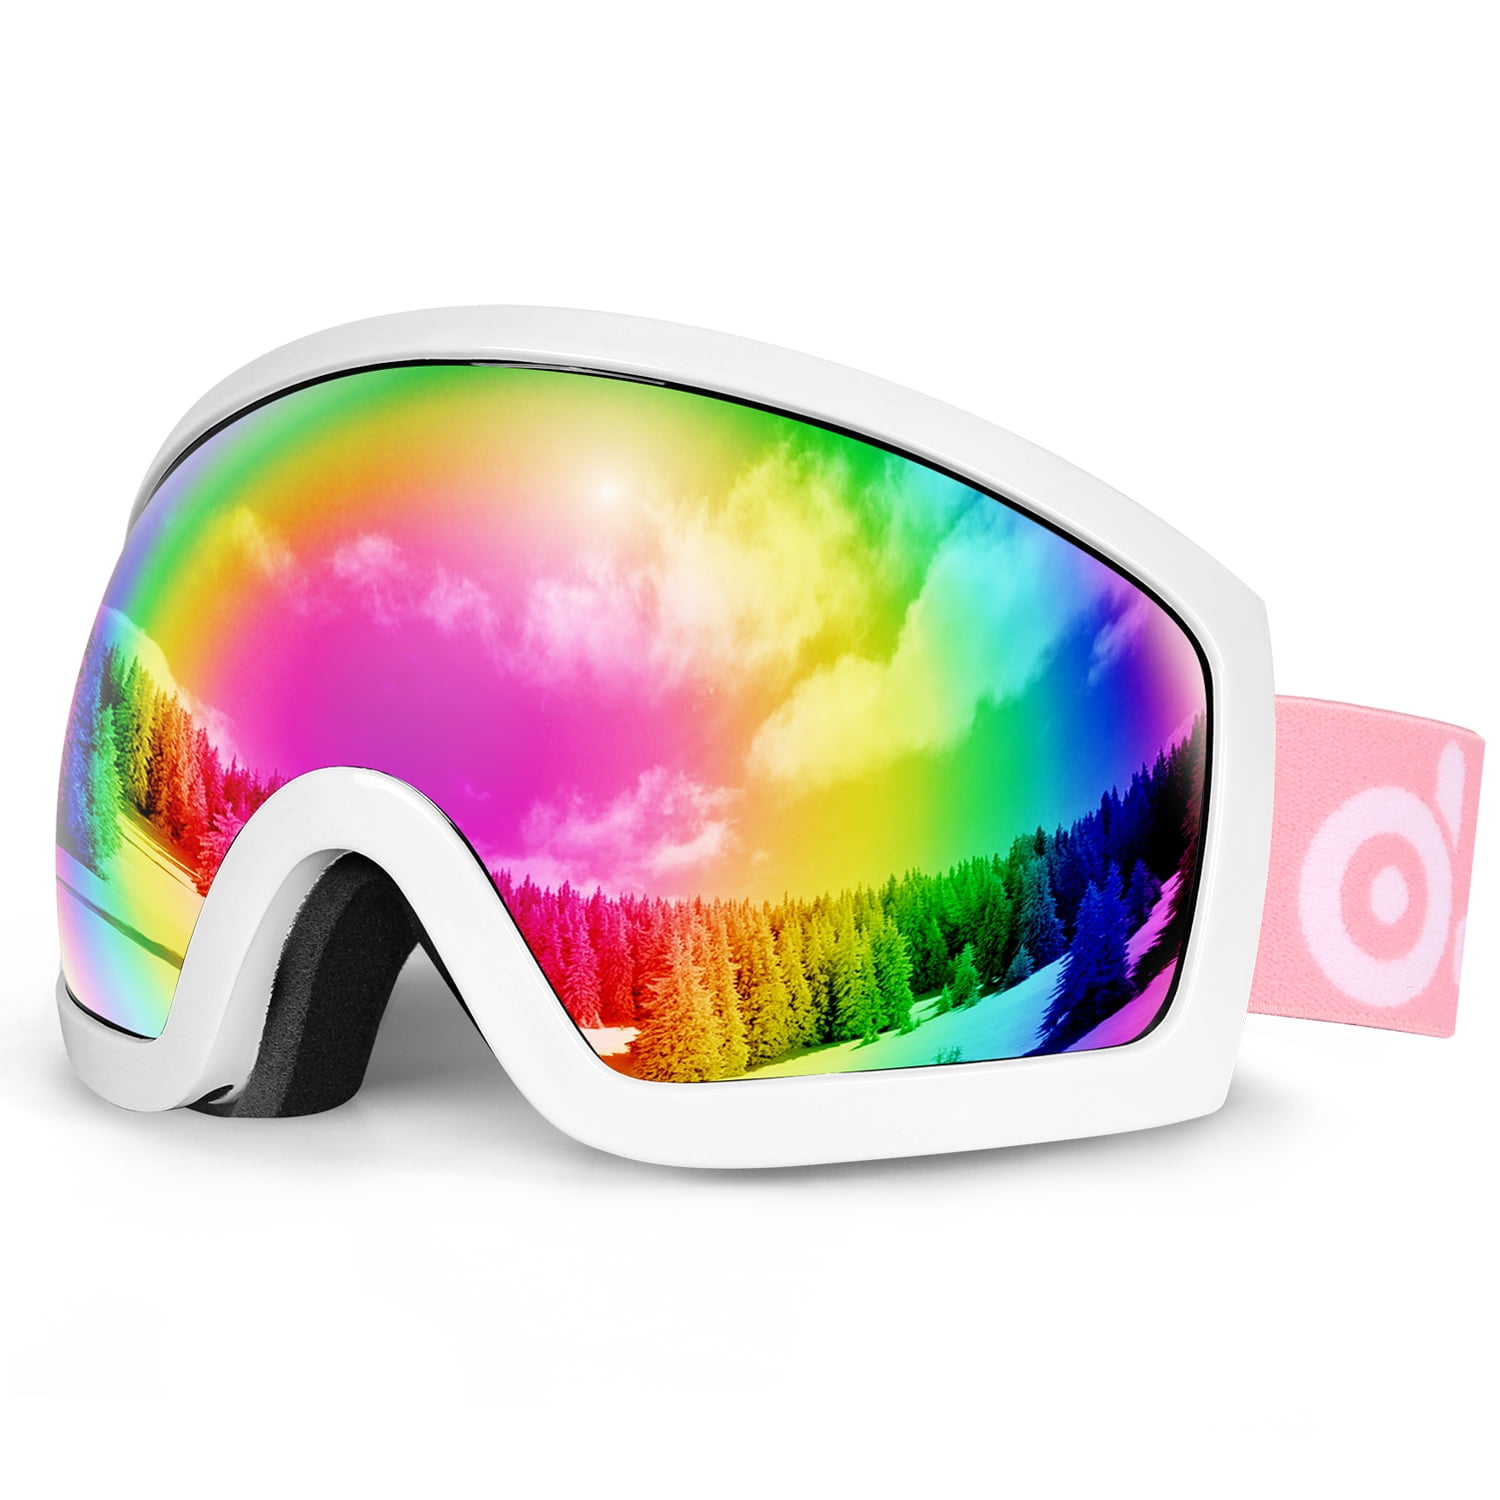 Ravs Skibrille Snowboardbrille Double Lens Antifog Snow goggle Chrom 